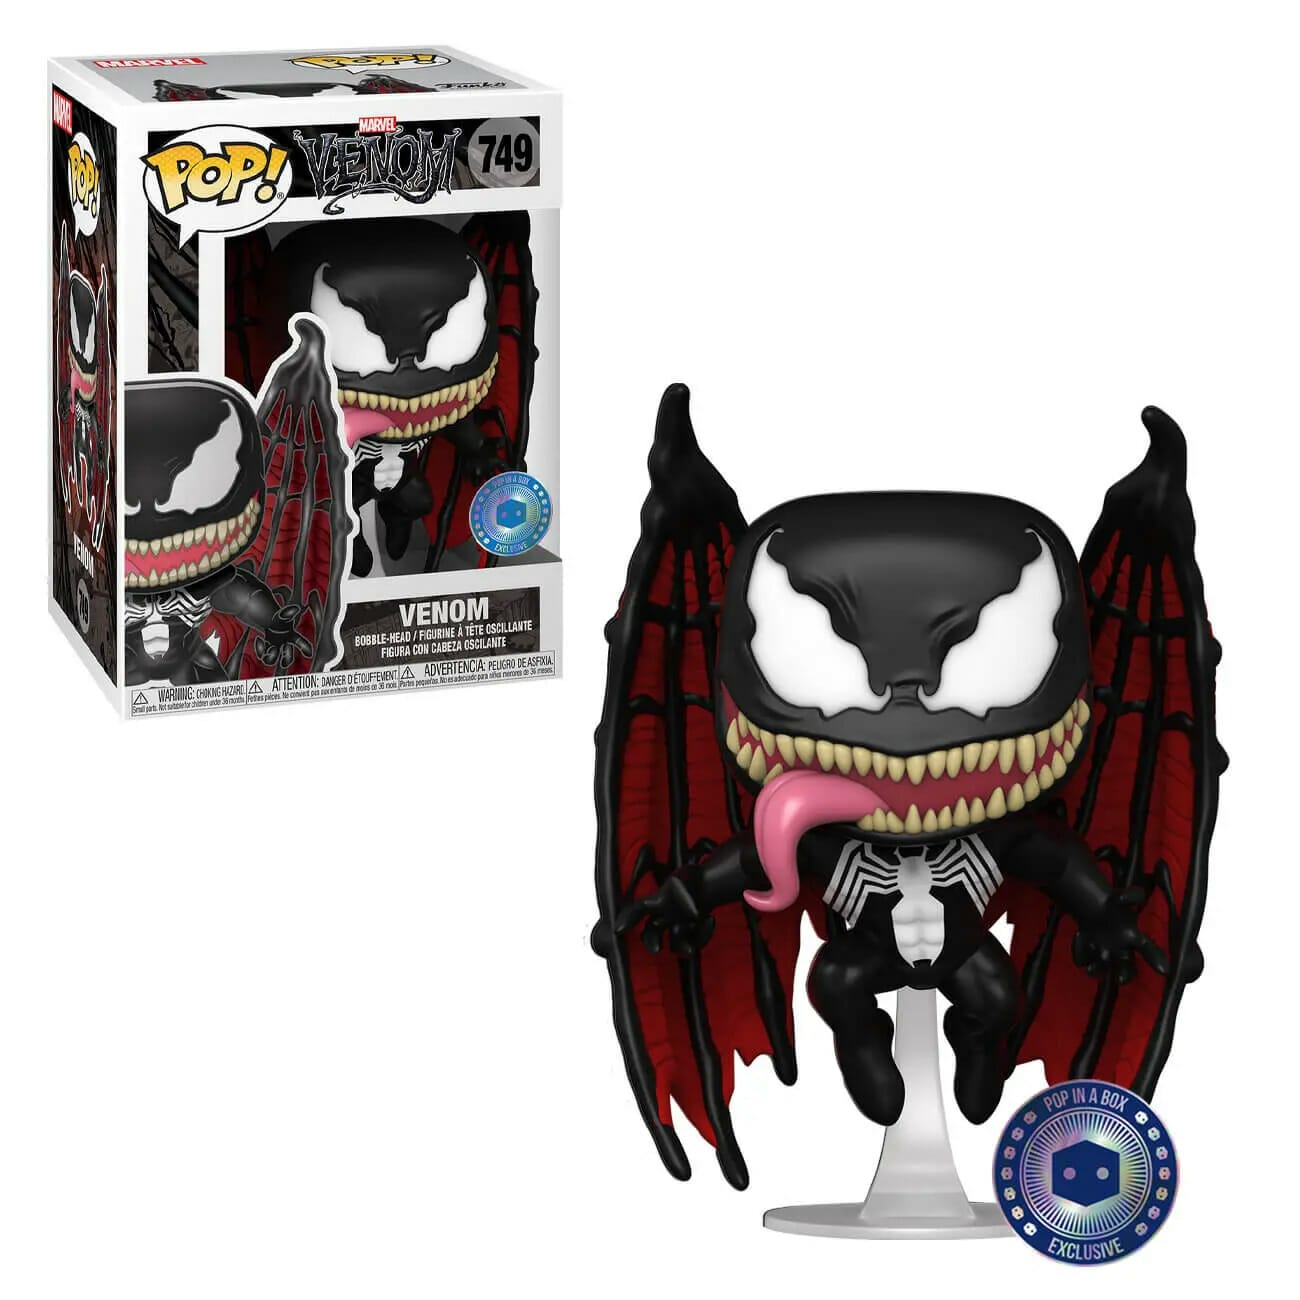 Winged Venom